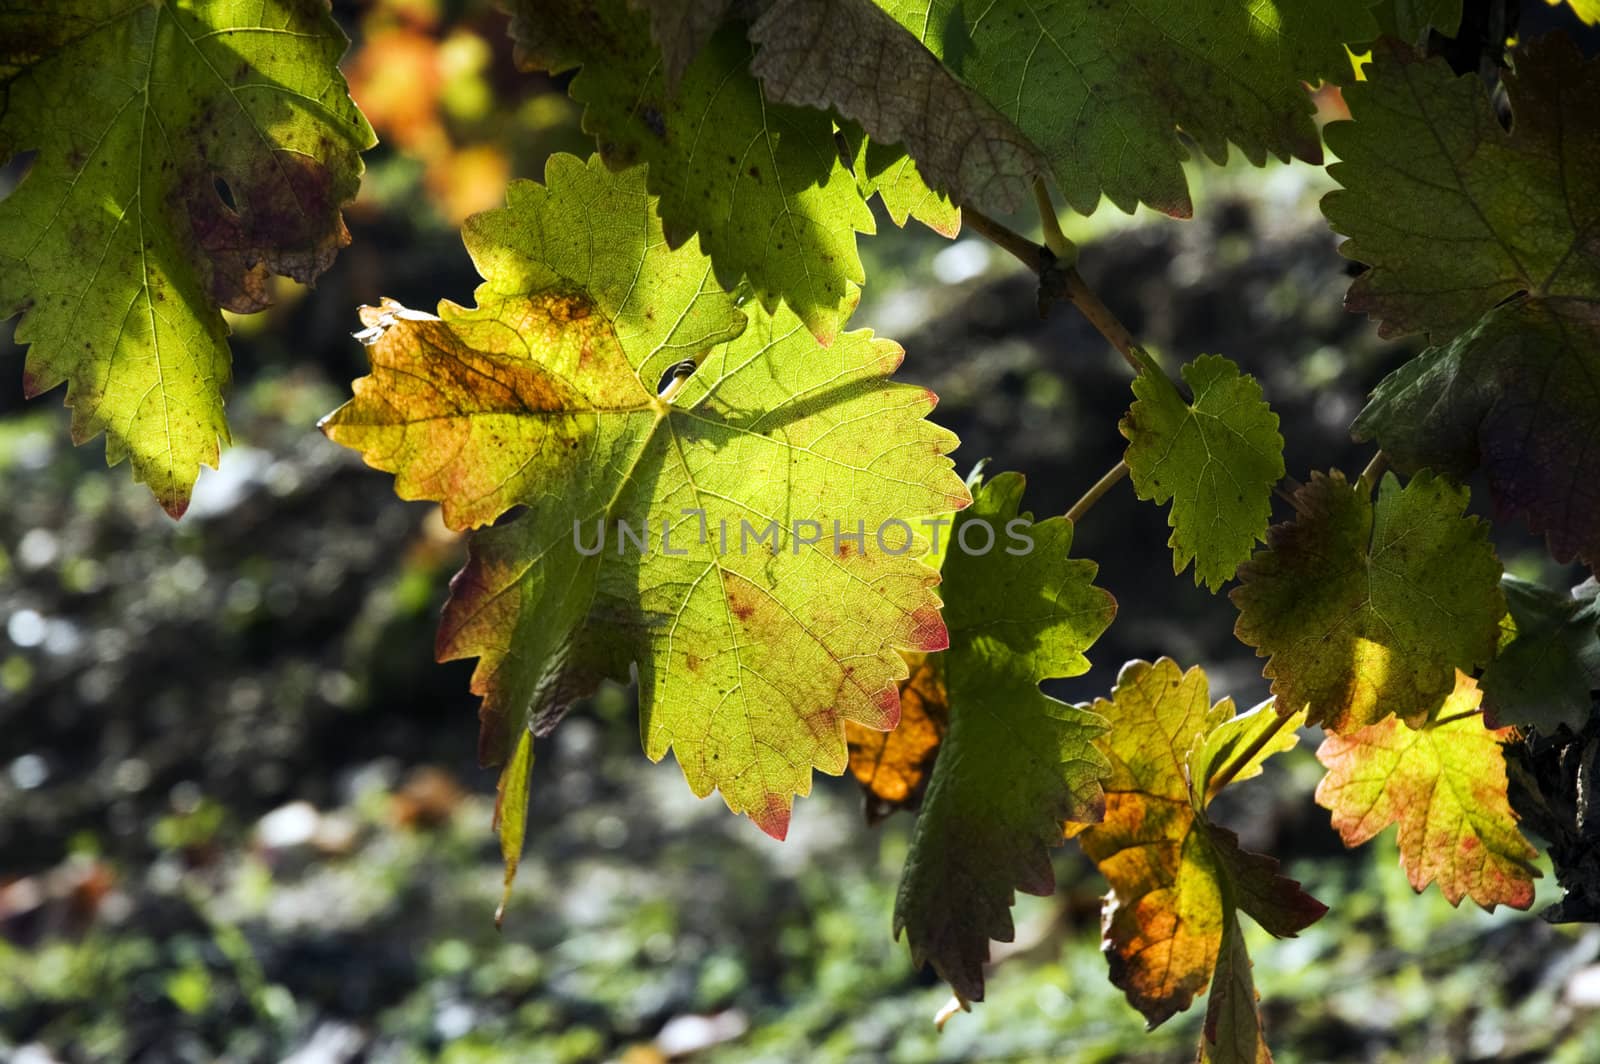 Autumn leaves on vine by mrfotos